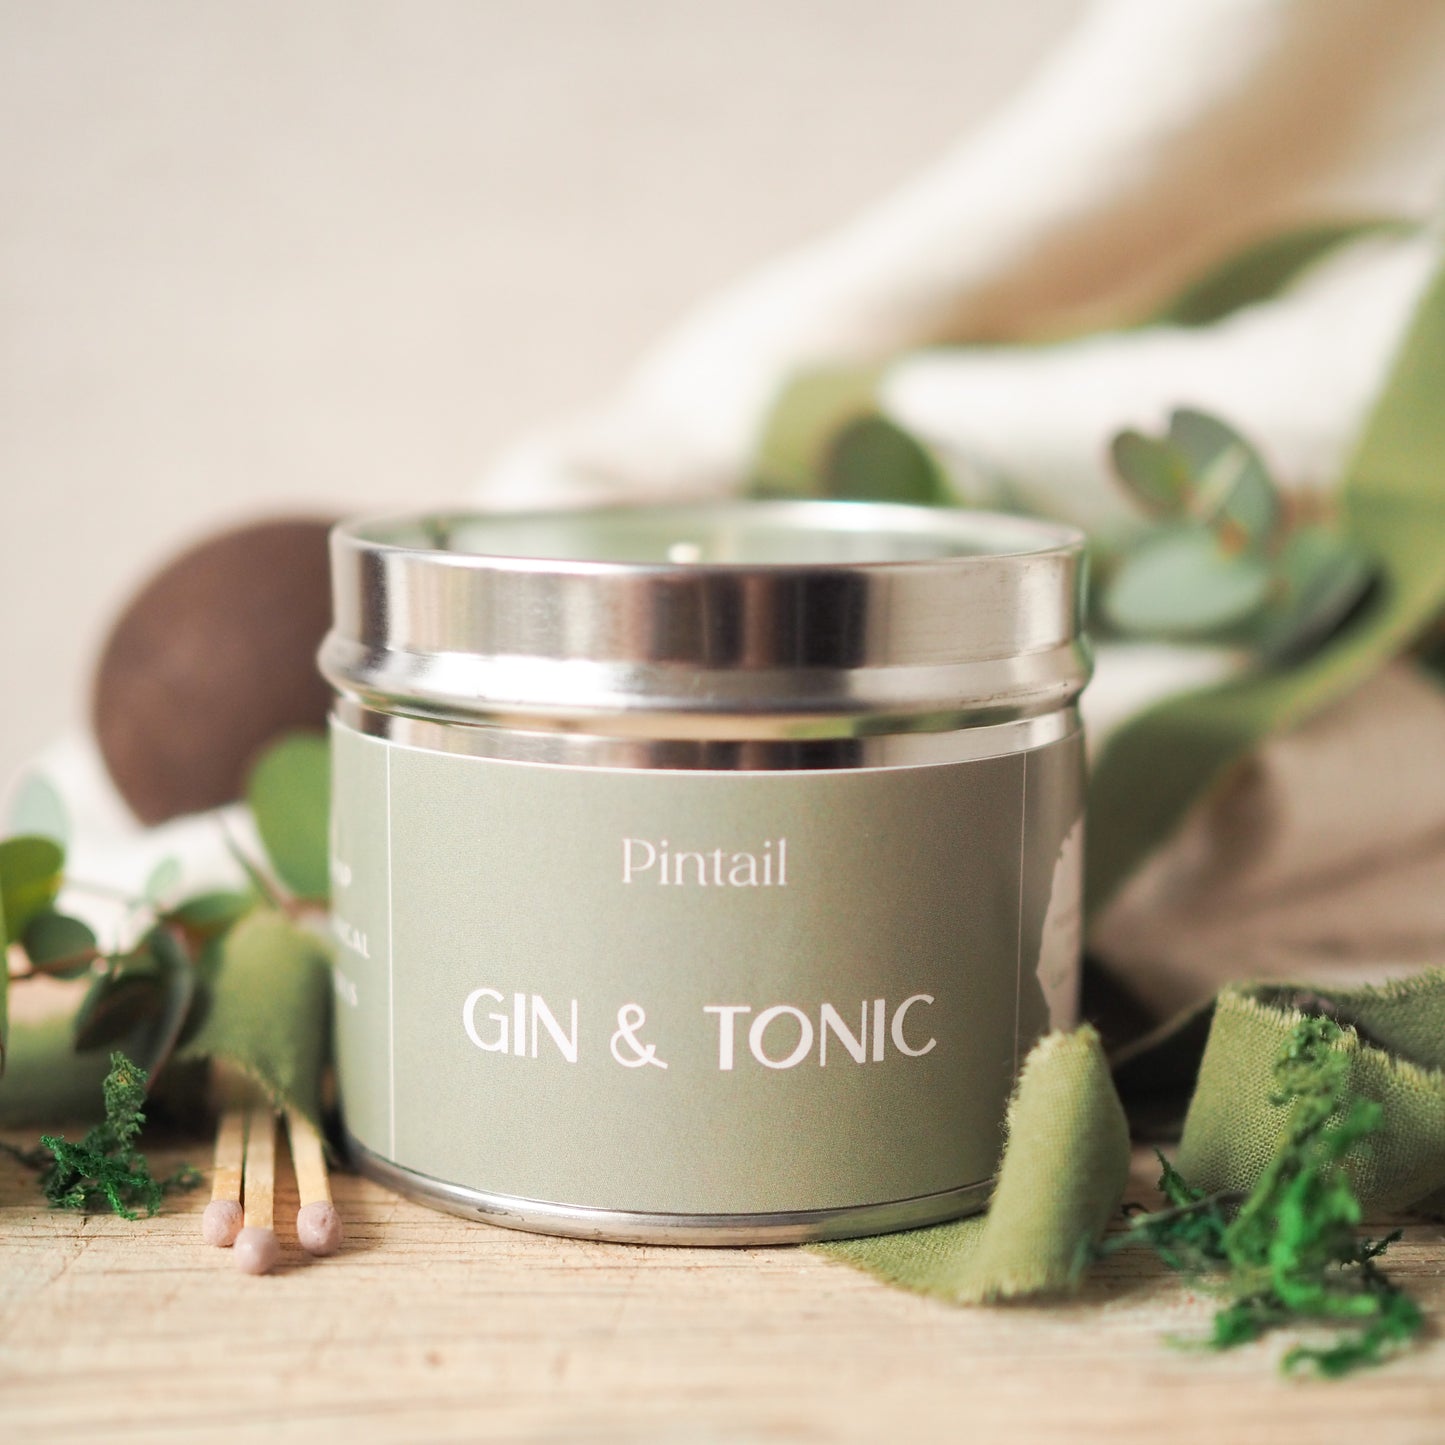 Gin & Tonic Paint Pot